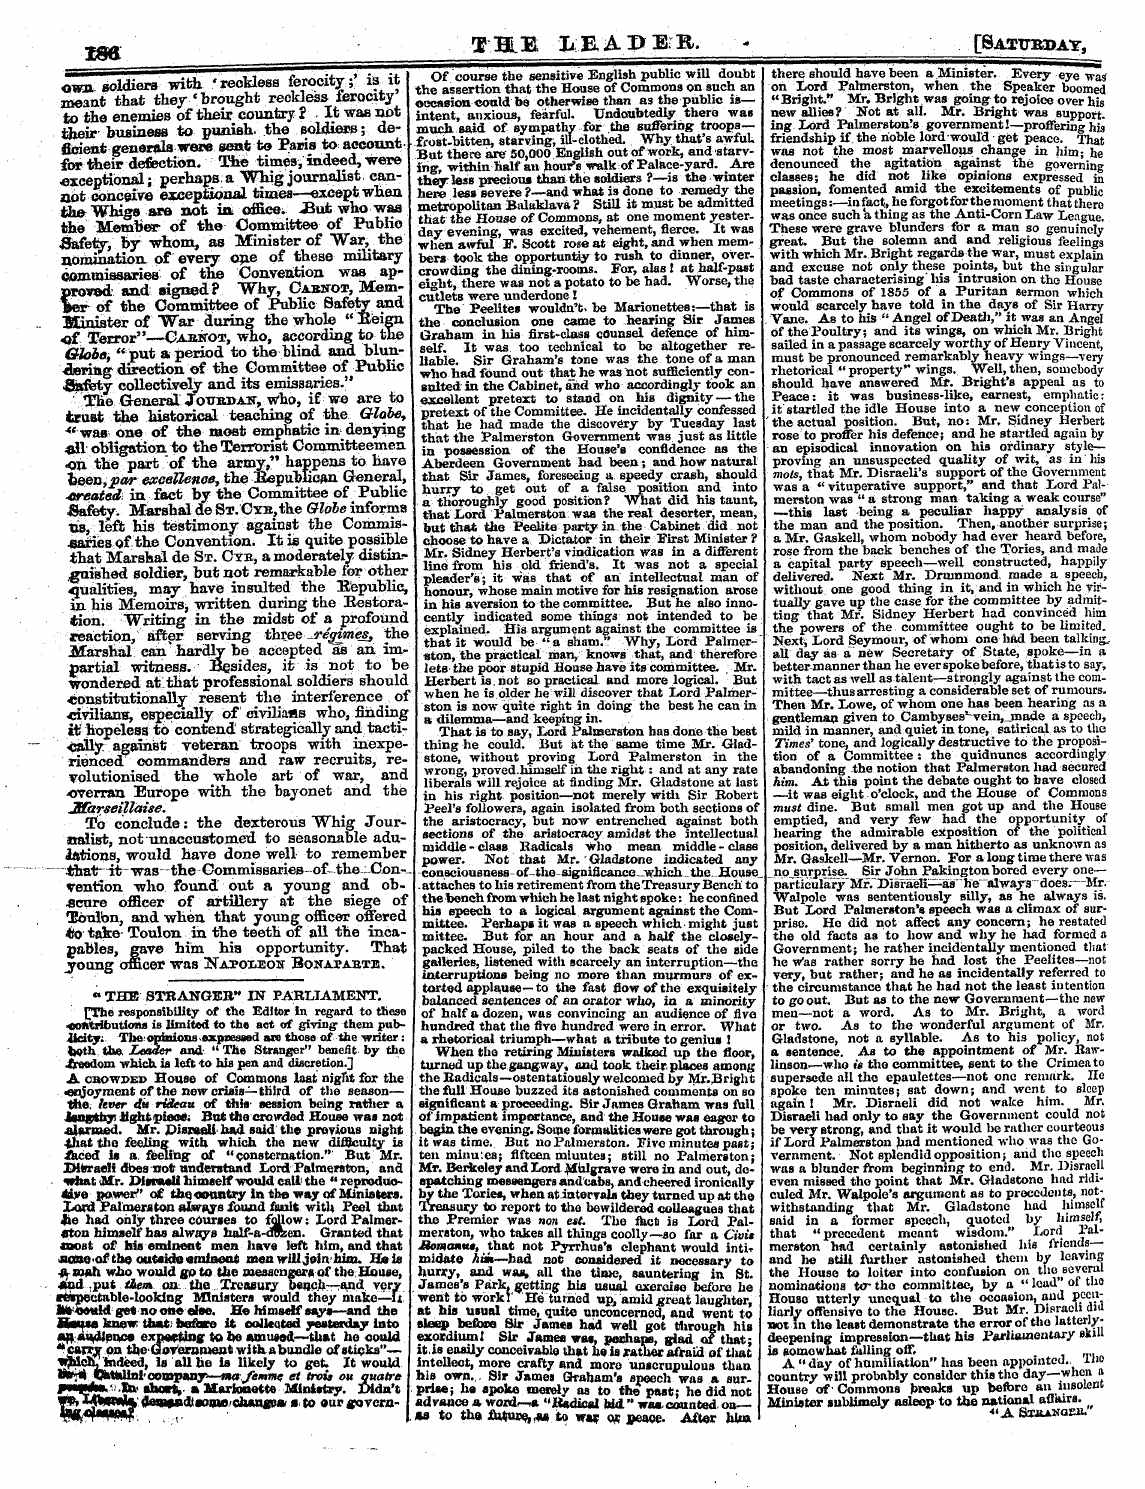 Leader (1850-1860): jS F Y, 2nd edition - Im Fle ^Eaprr. R [Satttkday ^